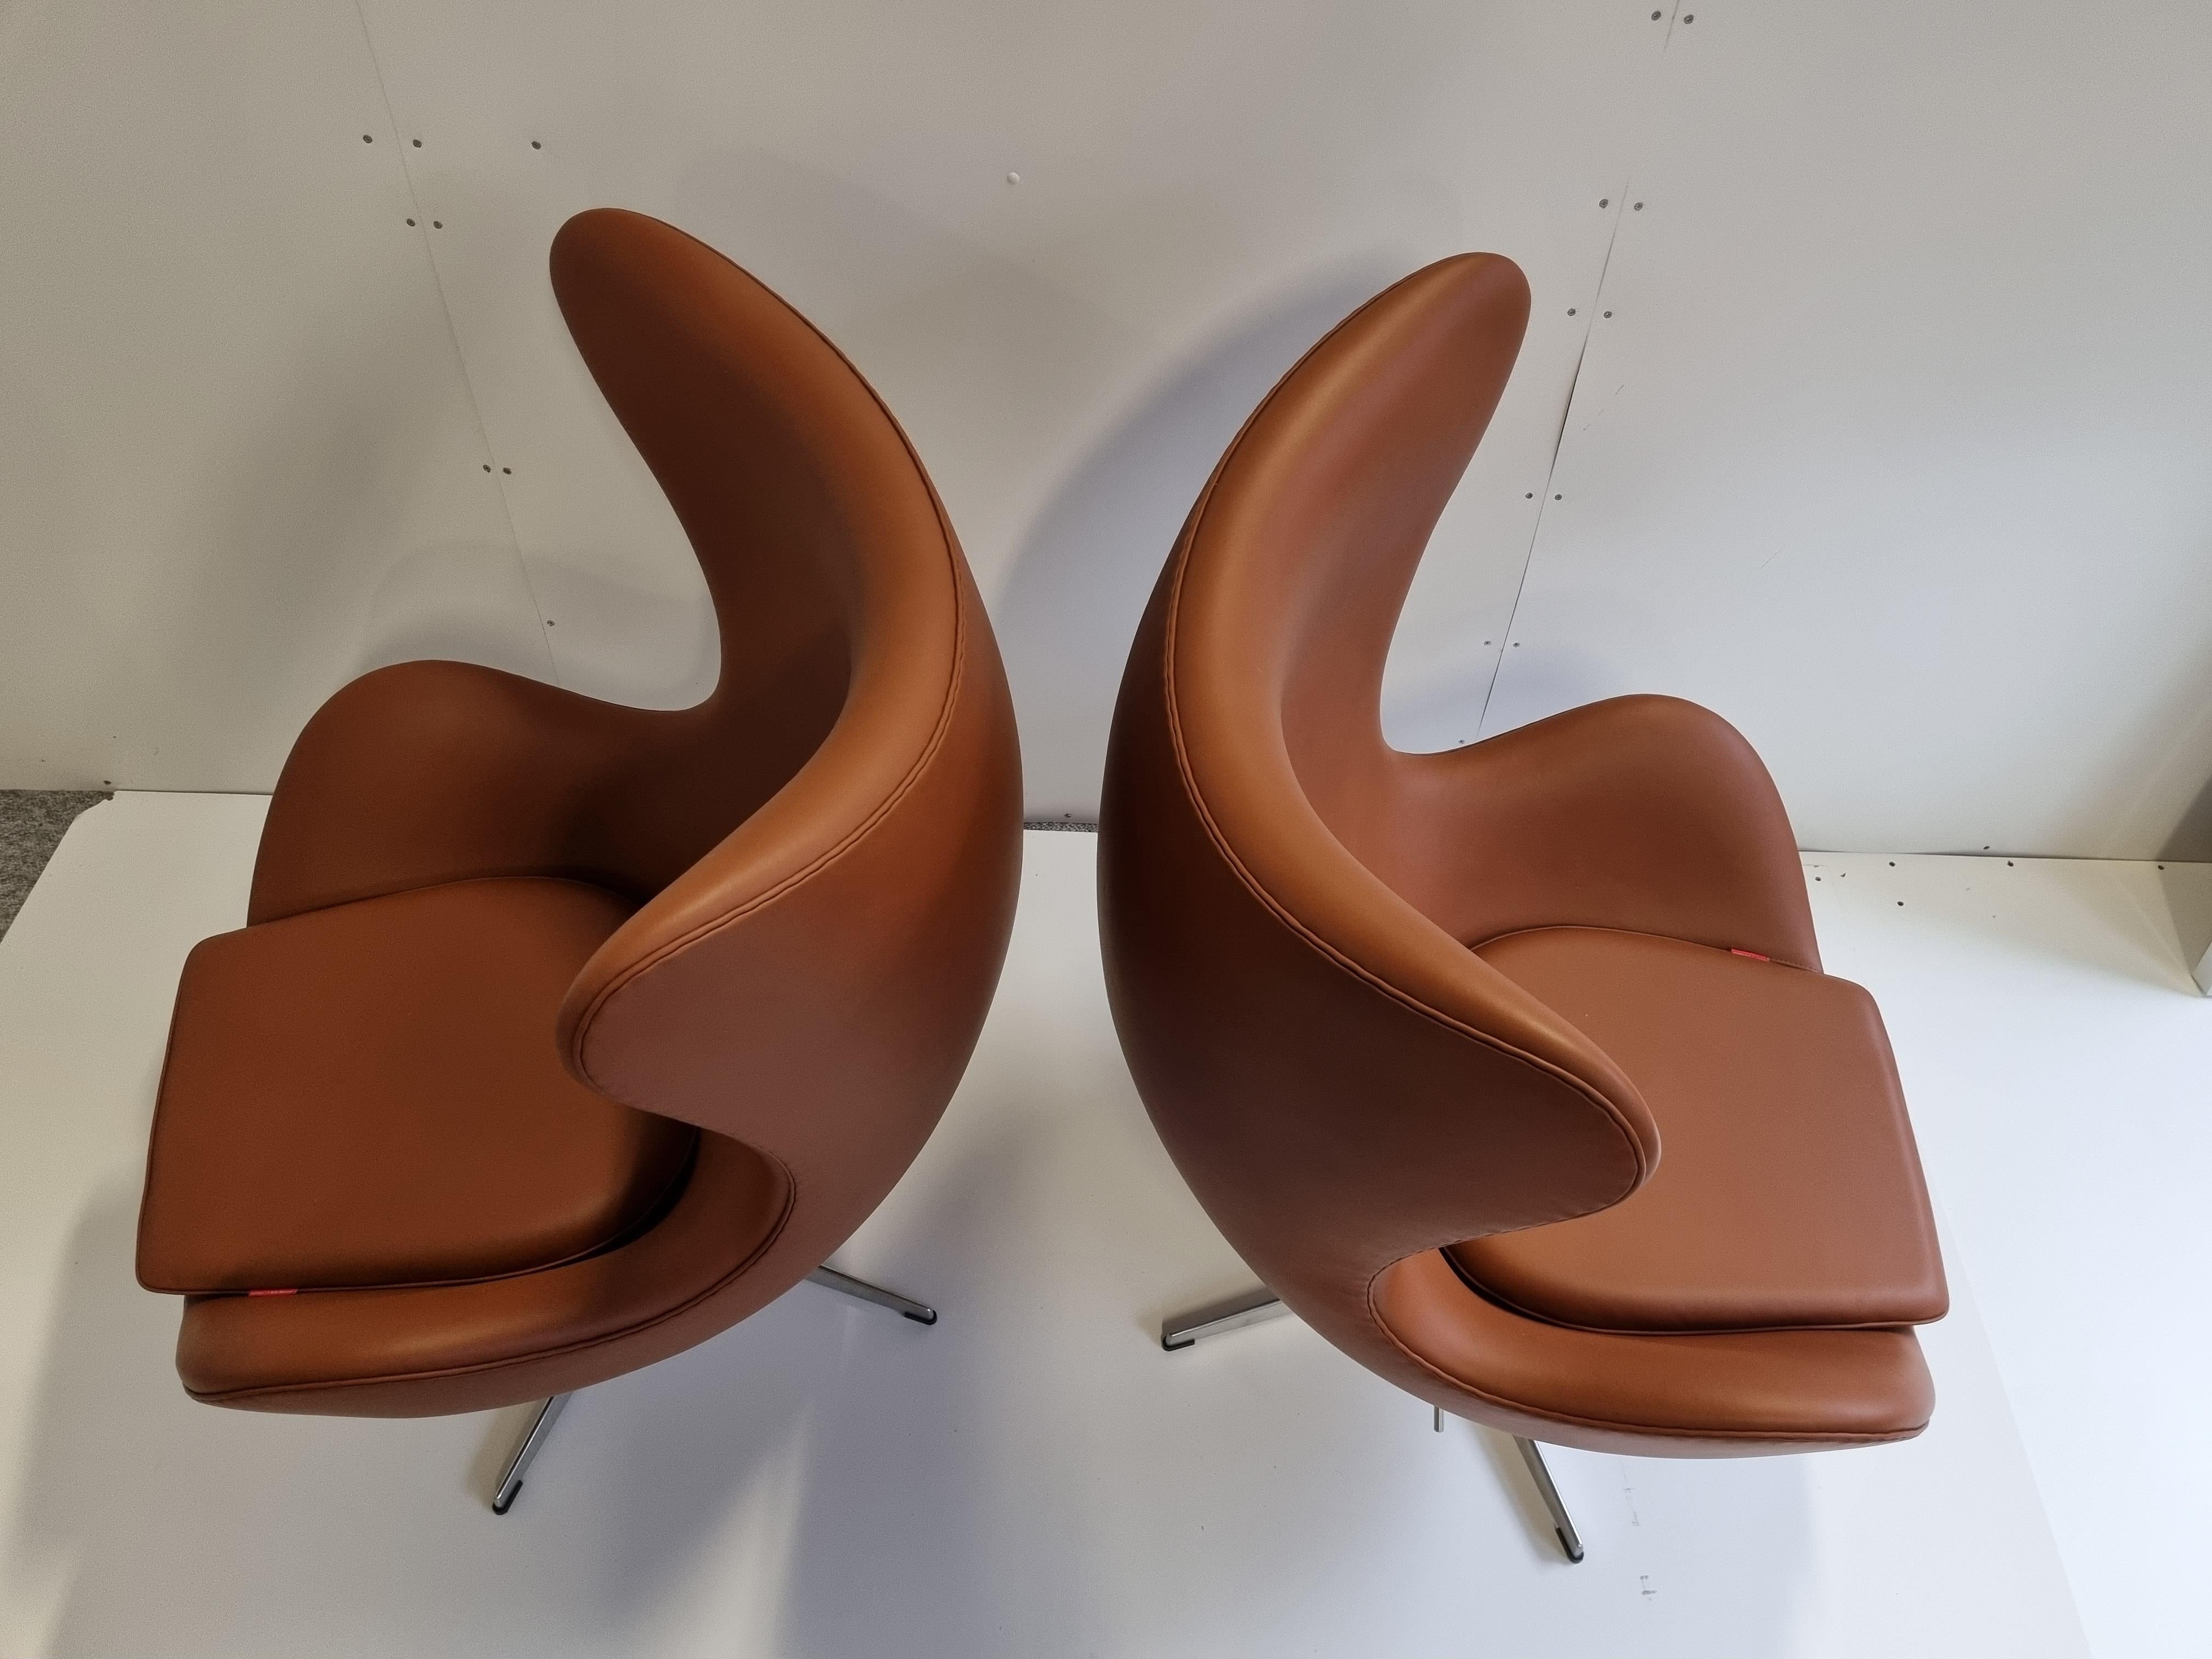 Pair Arne Jacobsen Egg Chairs by Fritz Hansen For Sale 3